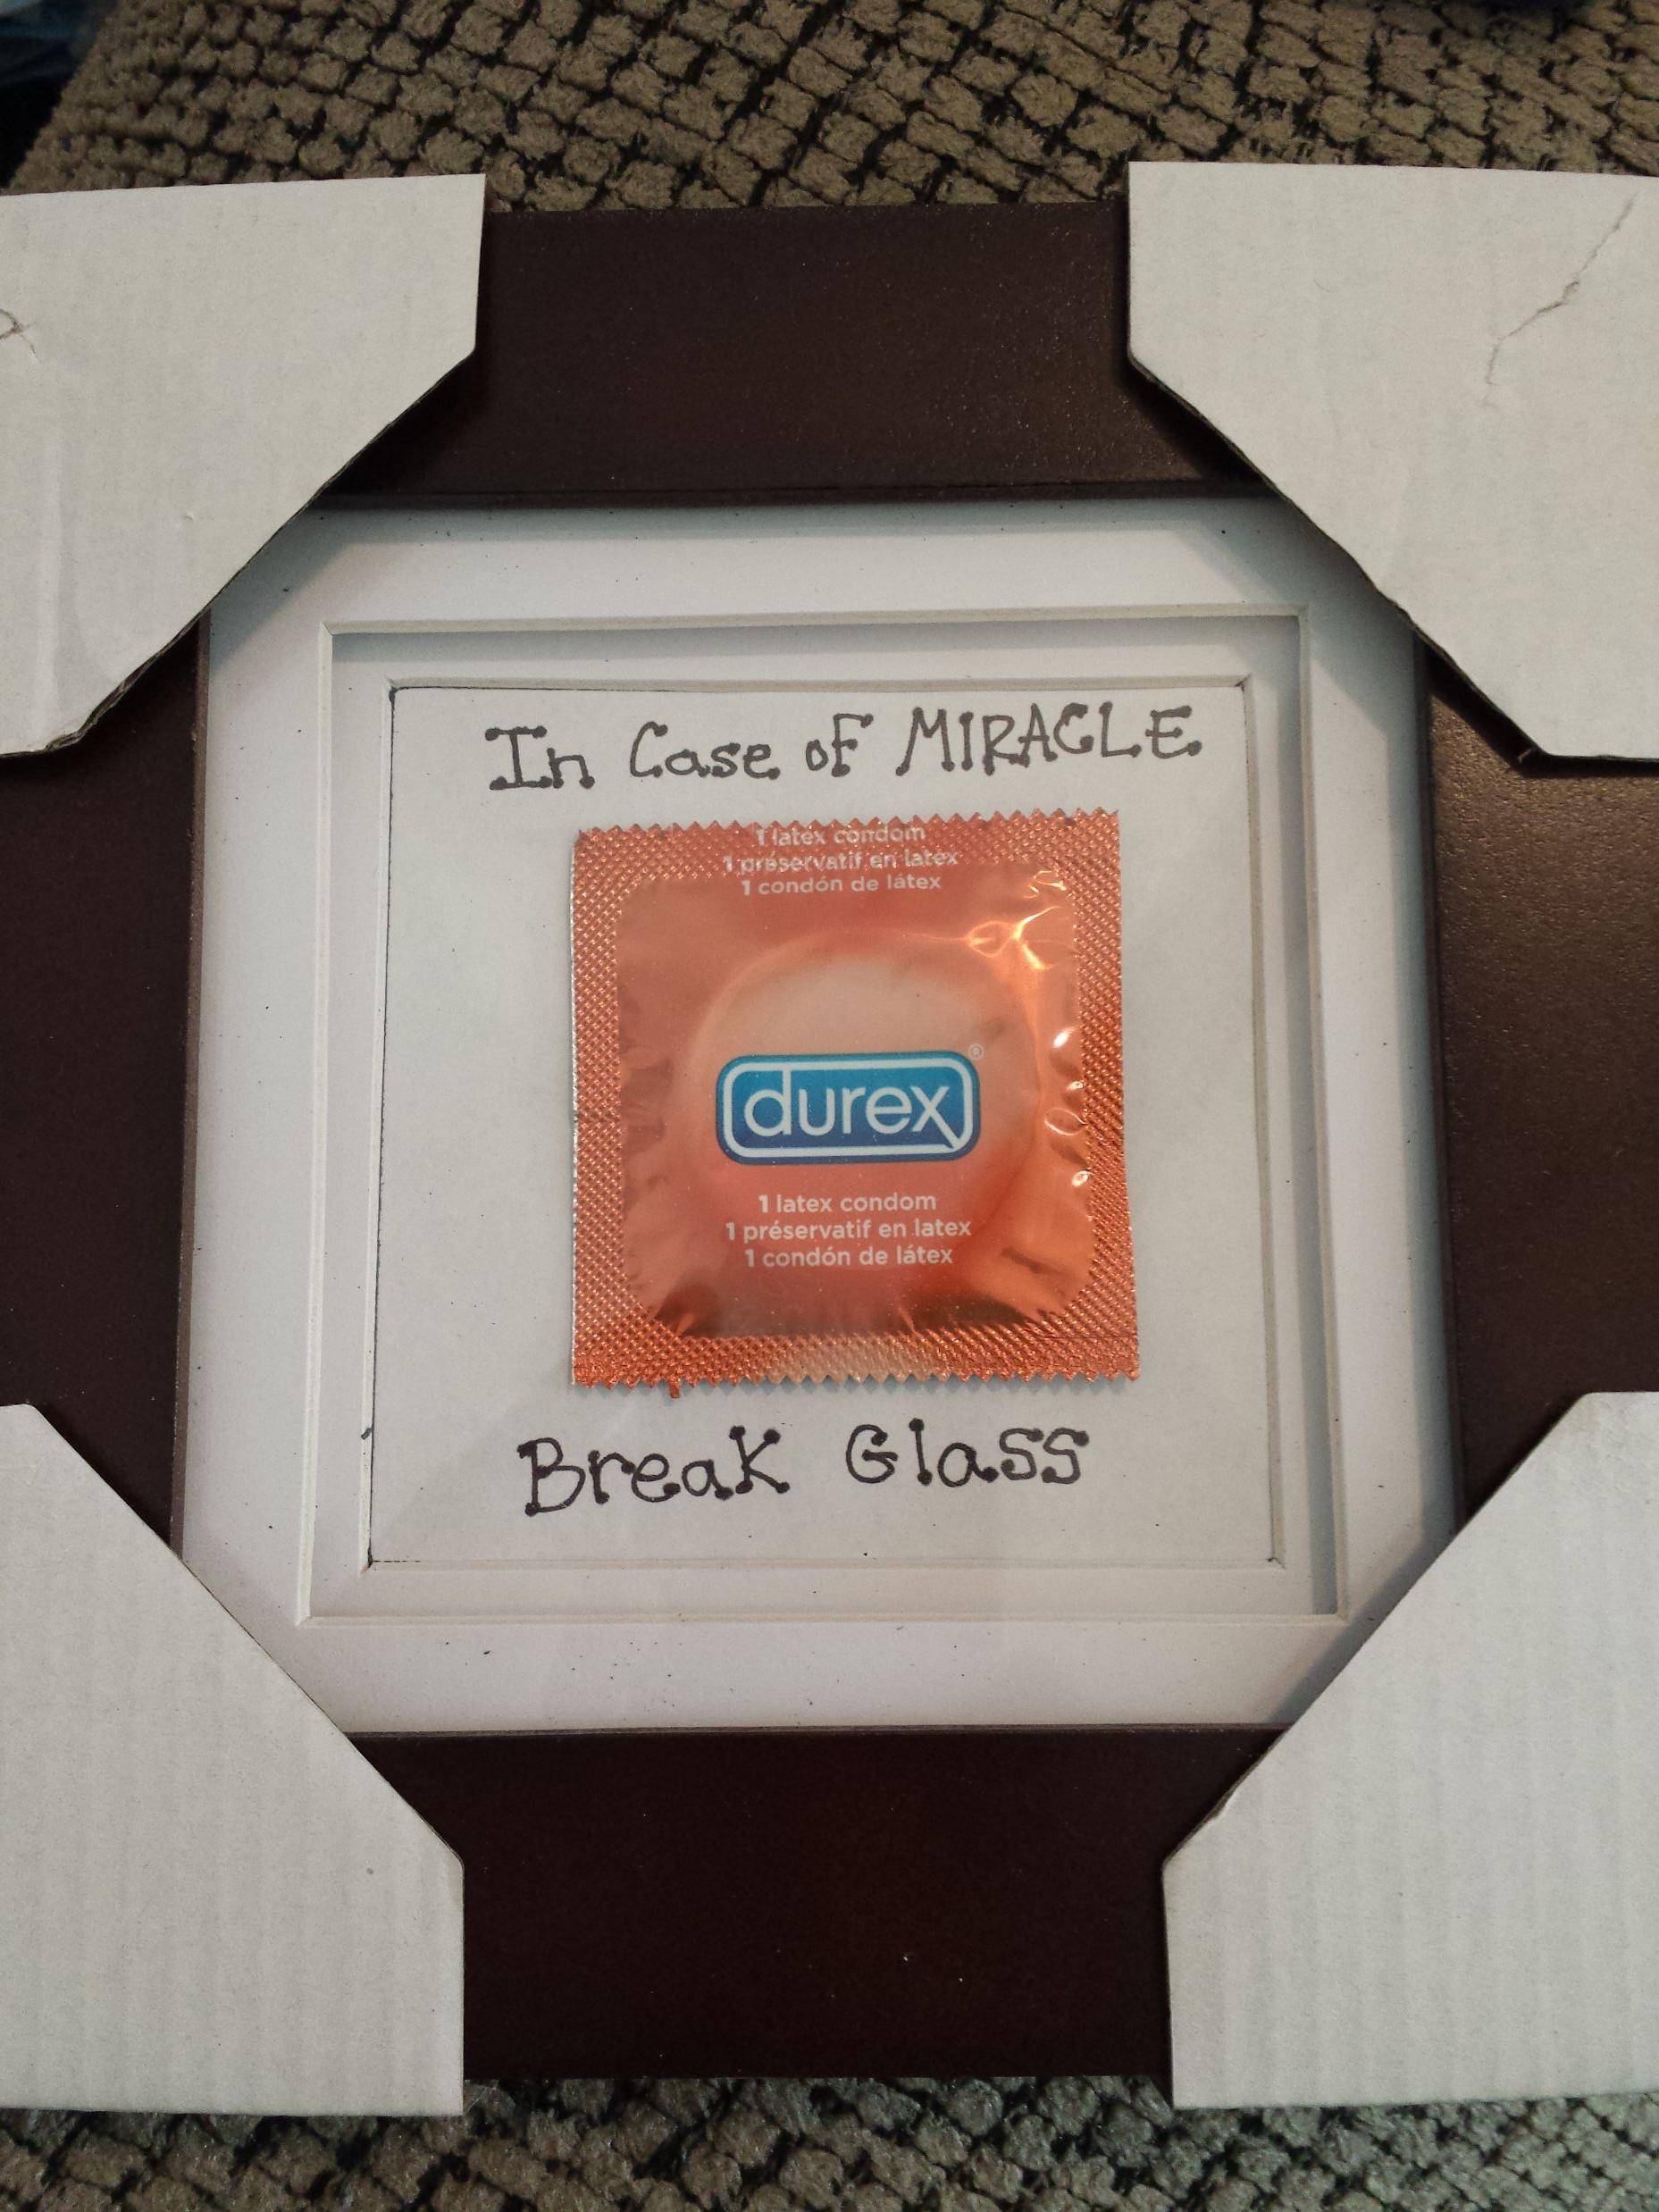 random case of miracle break glass condom - In Case of Miragle durex Break Gloss